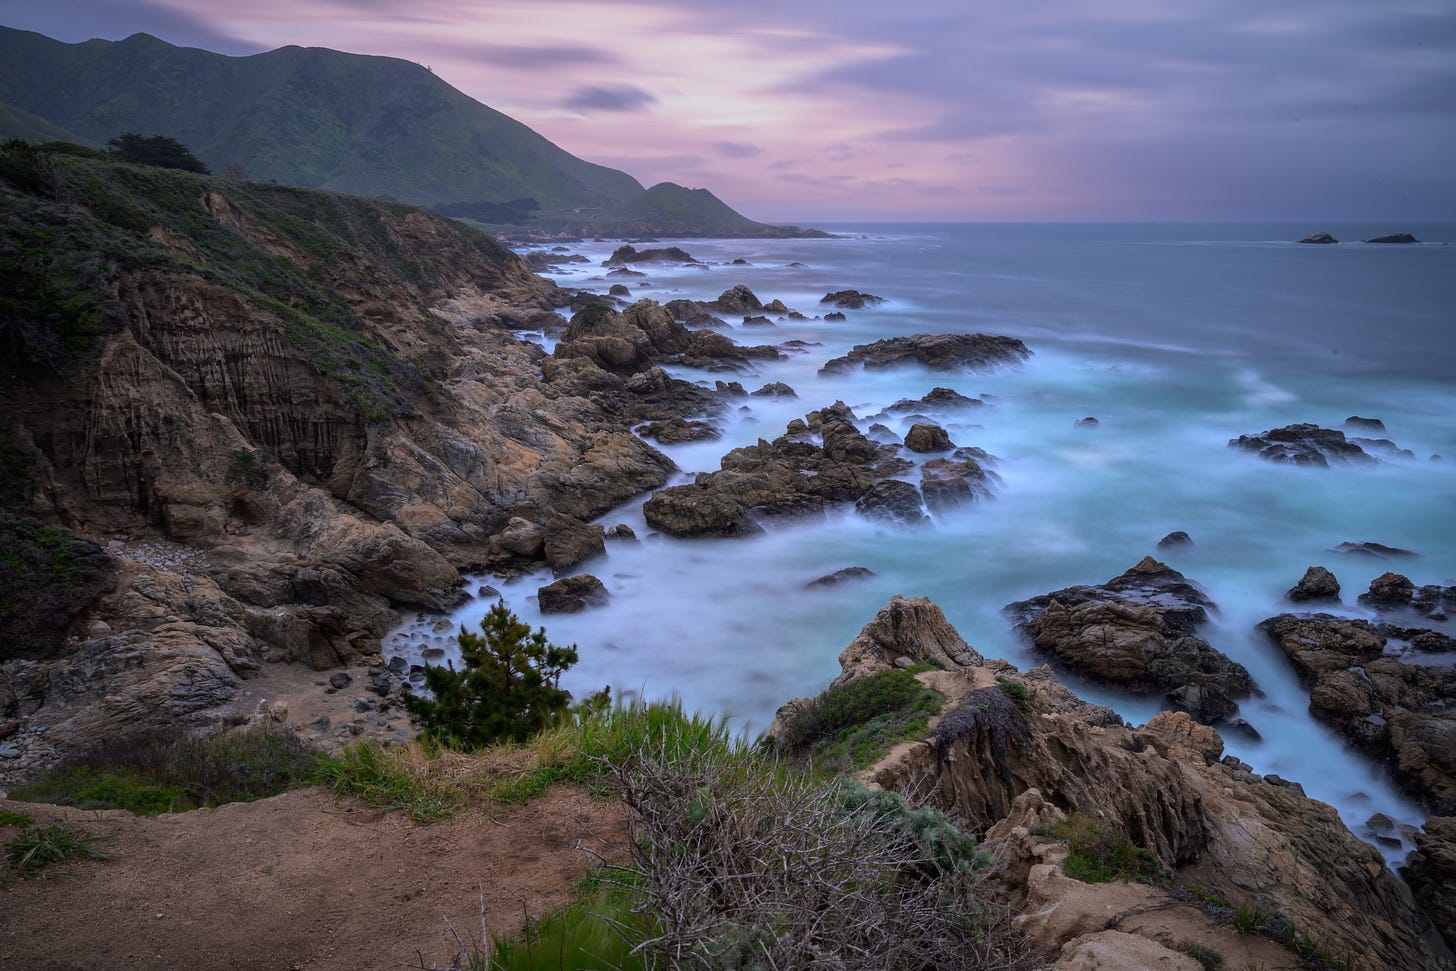 Sea cliffs and ocean rocks on the California coast